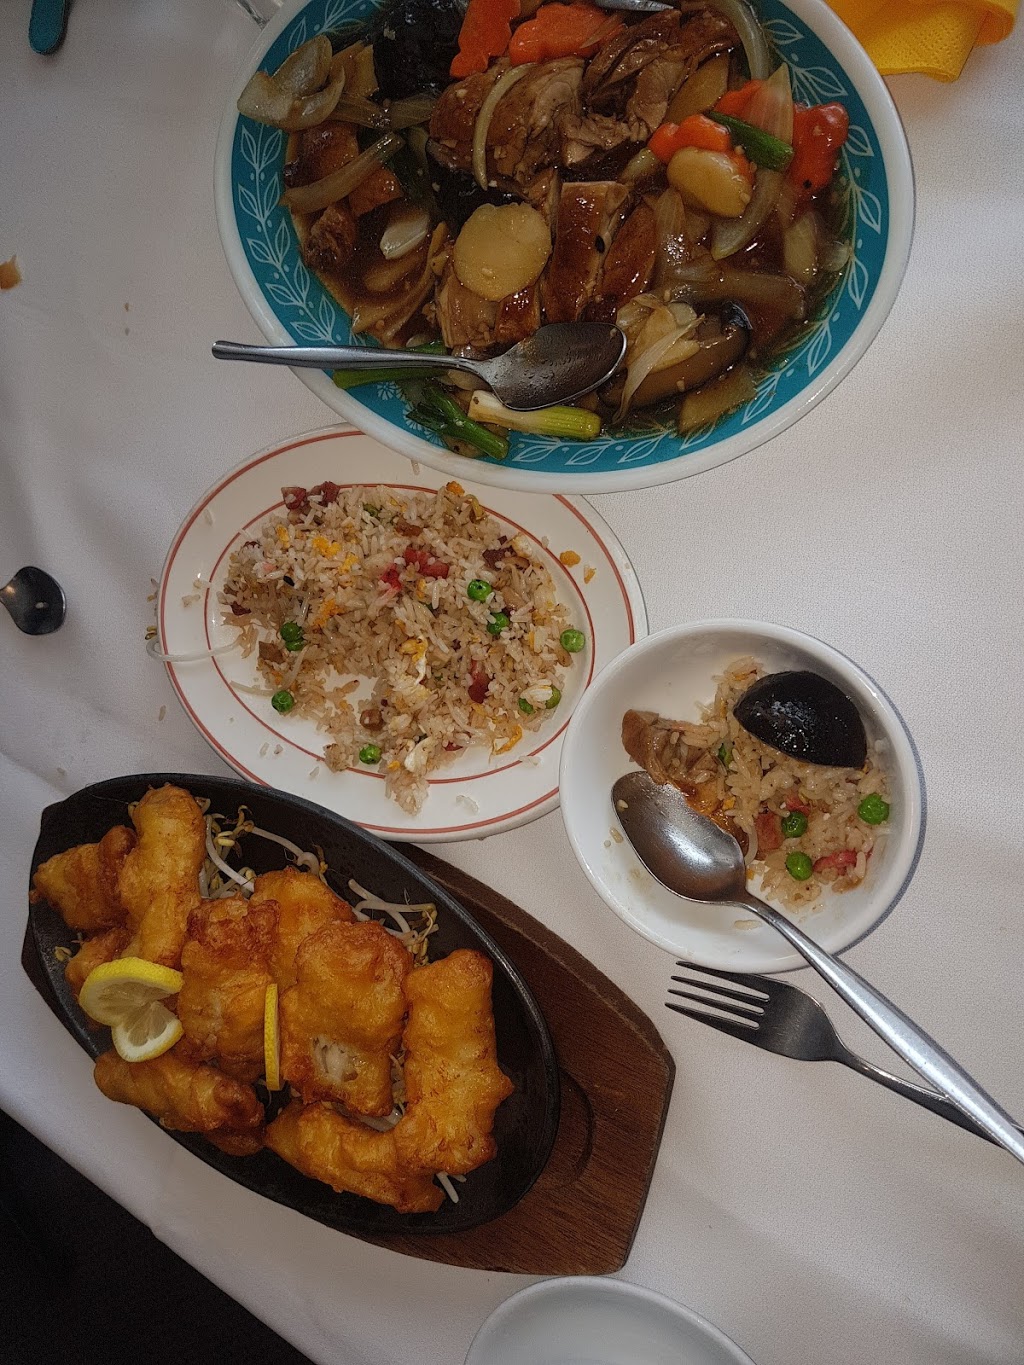 Lion Dance Chinese Restaurant | meal takeaway | 5 Ferguson St, Williamstown VIC 3016, Australia | 0393972579 OR +61 3 9397 2579